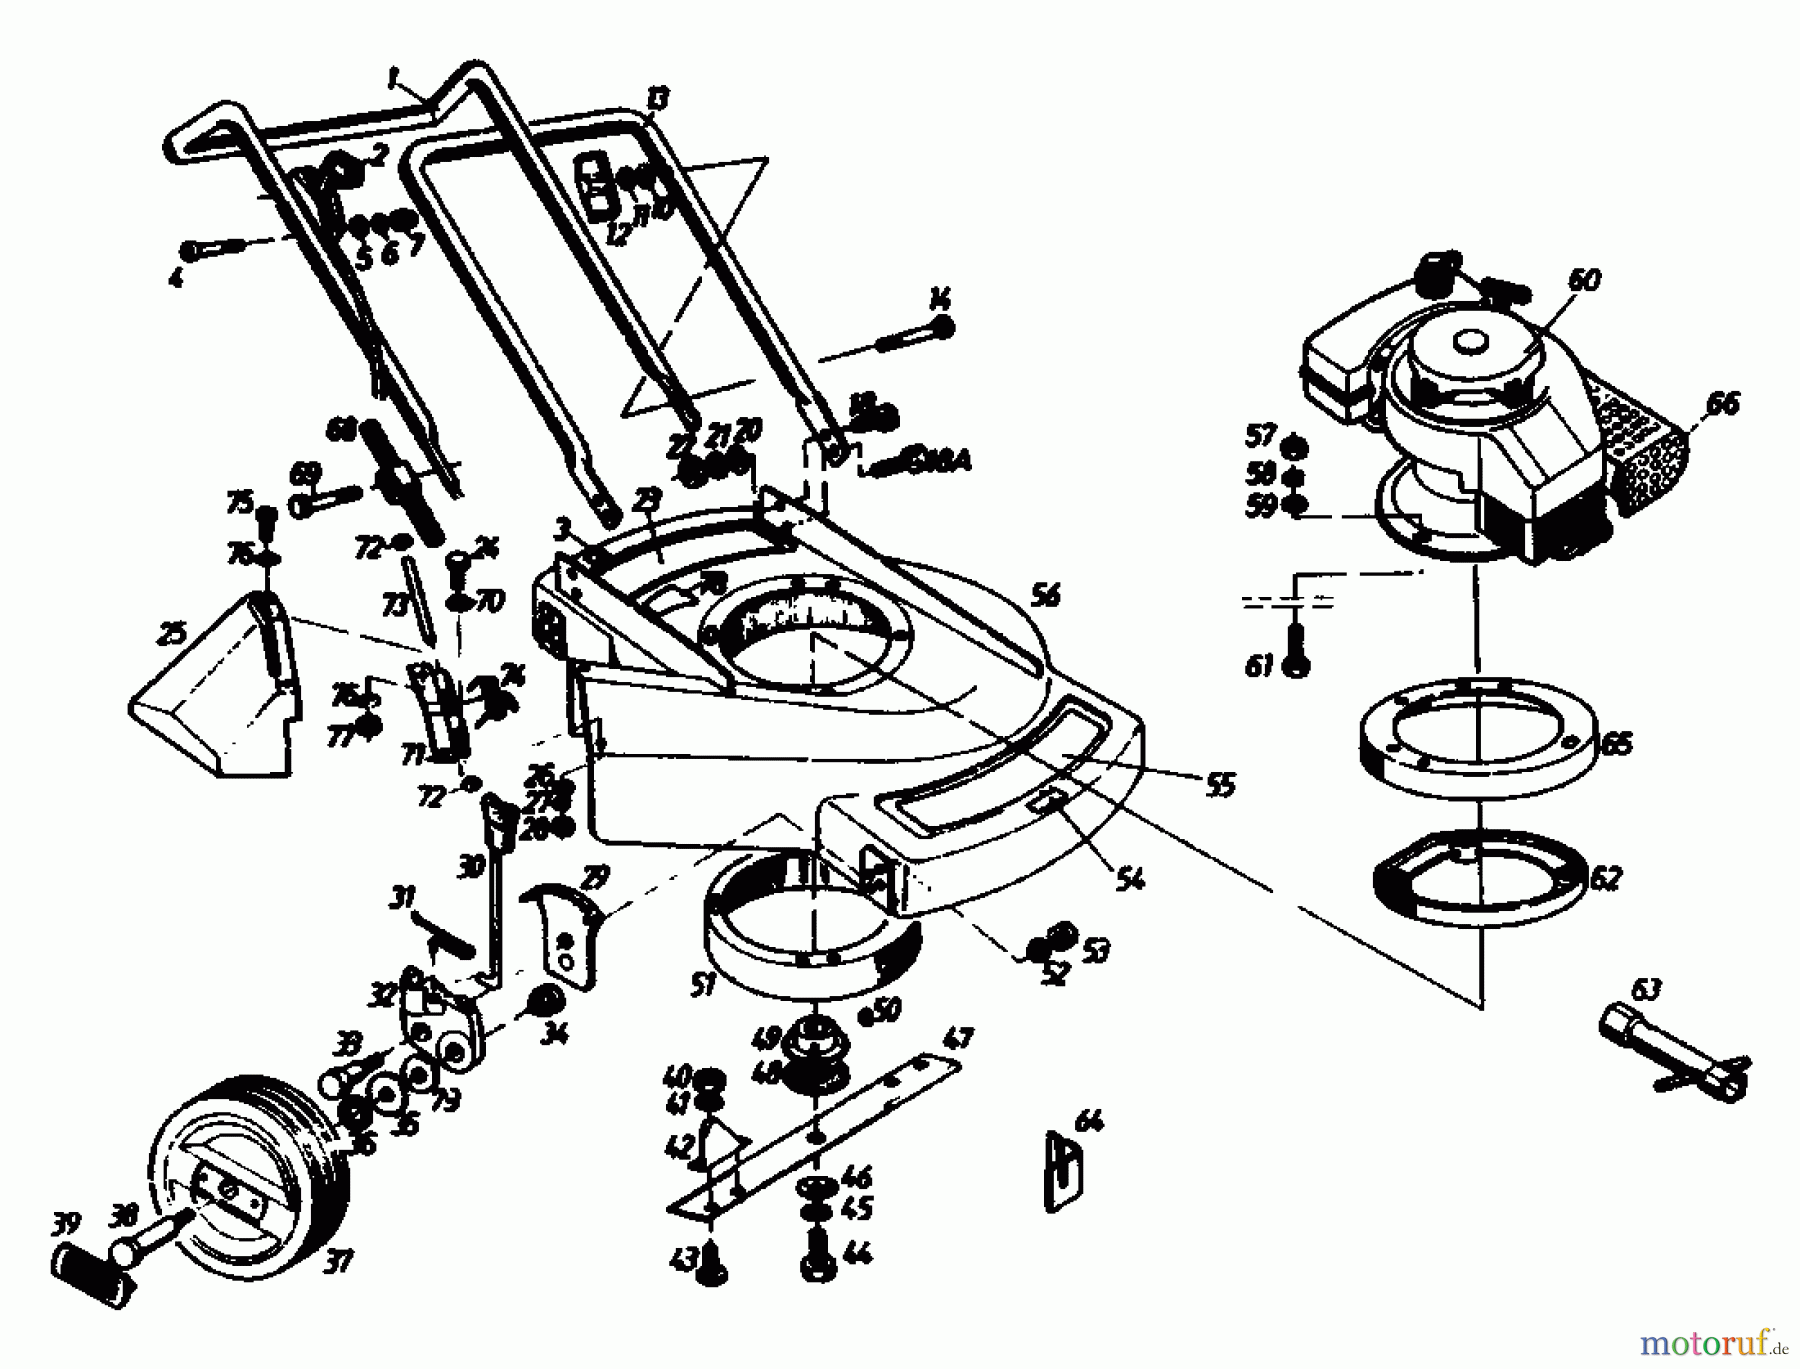  Gutbrod Petrol mower 135 BL 2 T 02869.06  (1989) Basic machine